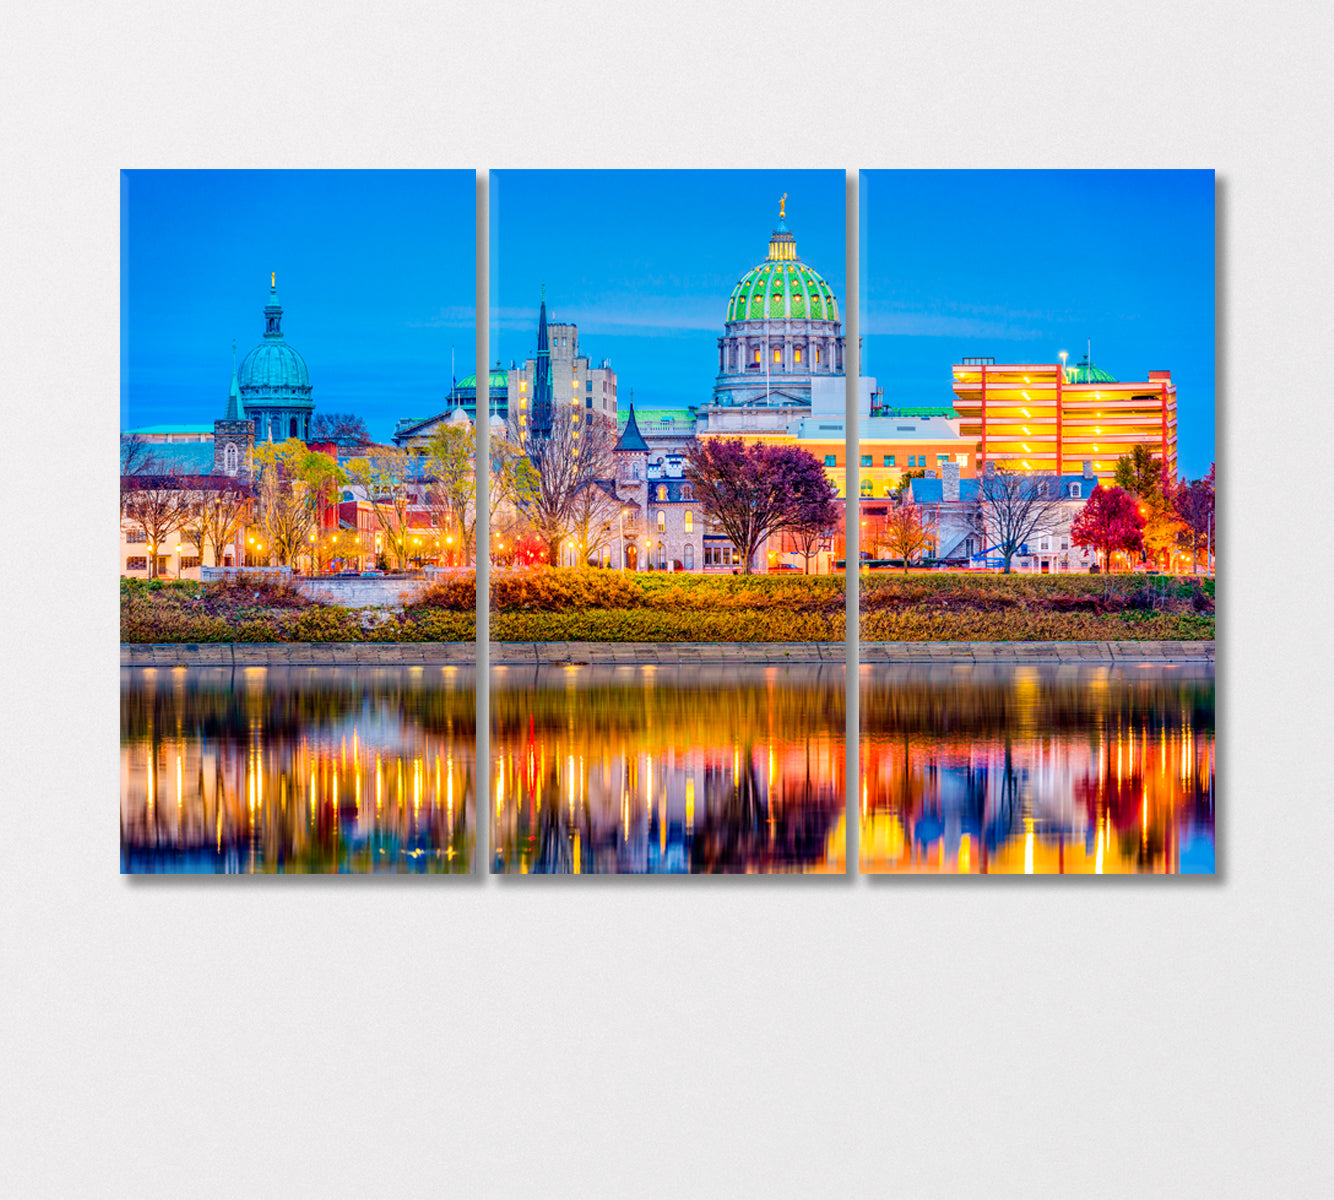 Harrisburg City on Susquehanna River USA Canvas Print-Canvas Print-CetArt-3 Panels-36x24 inches-CetArt